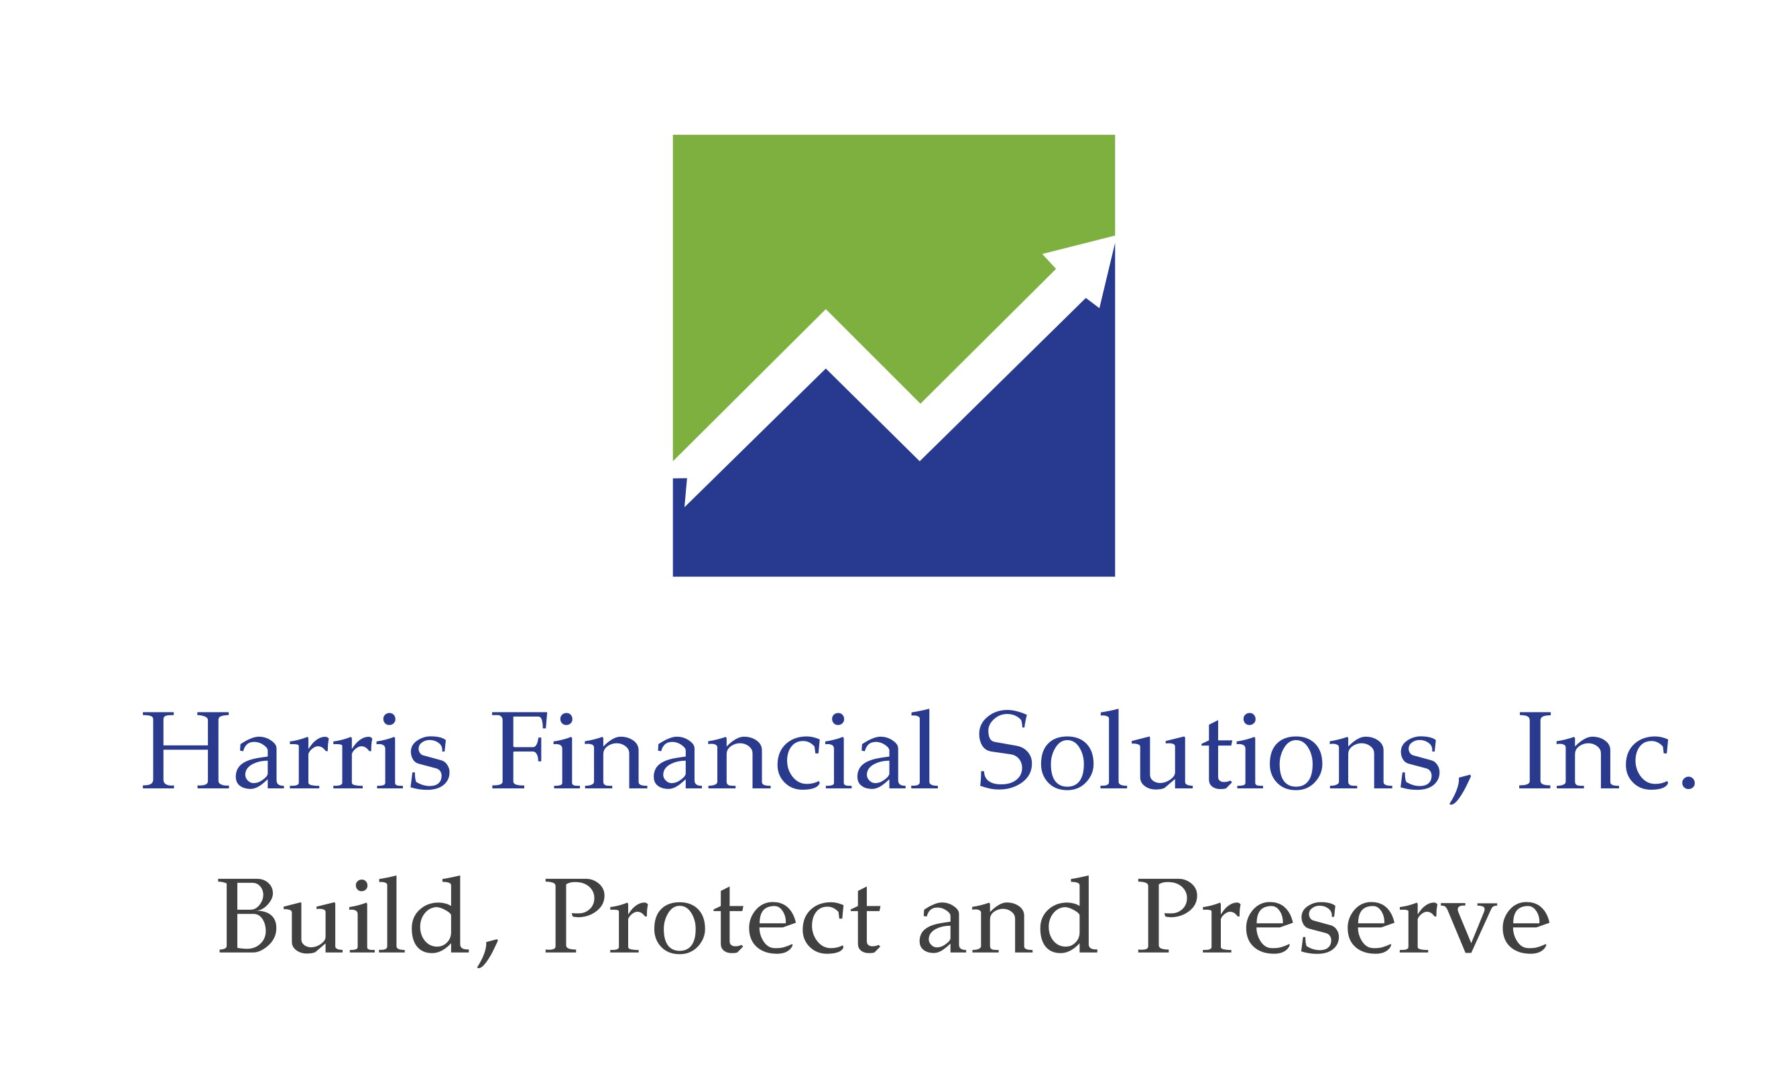 A logo for maris financial solutions, inc.